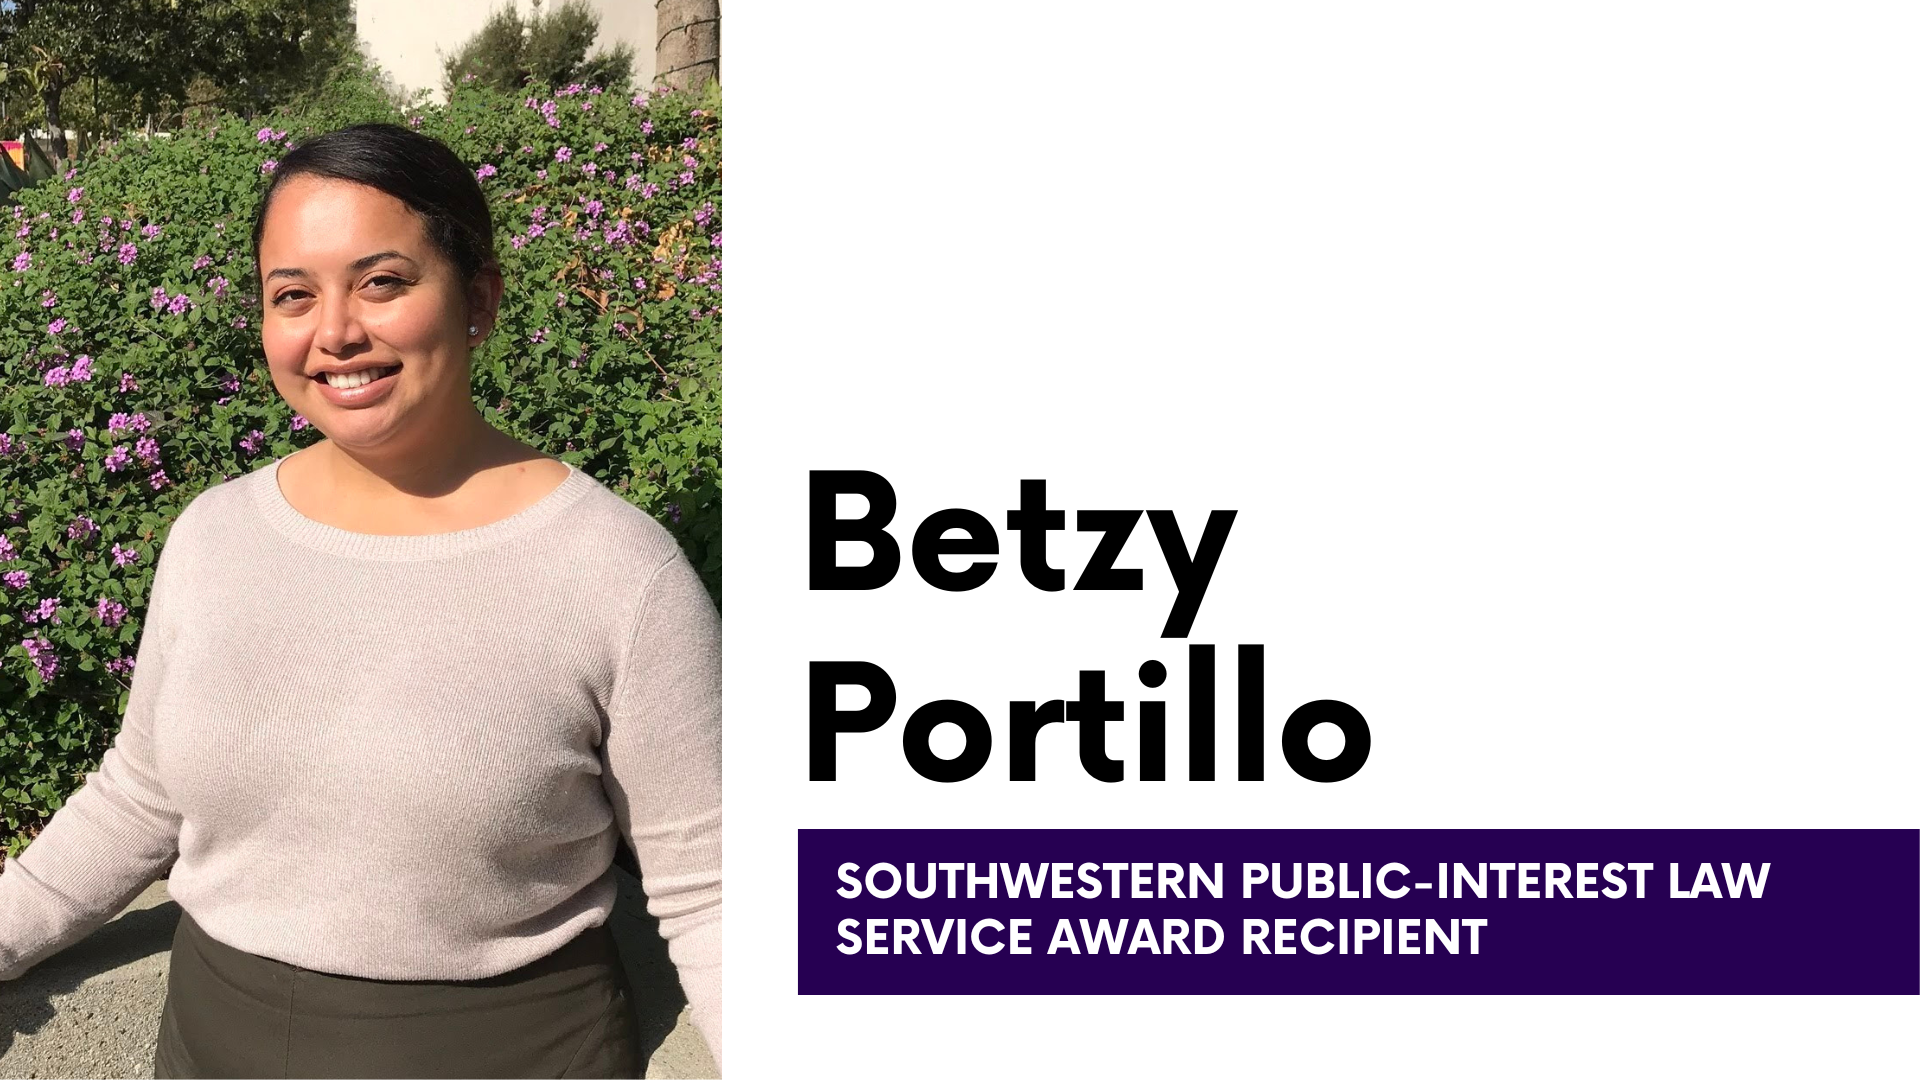 Betzy Portillo headshot with text: Betzy Portillo Southwestern Public-Interest Law Service Award Recipient